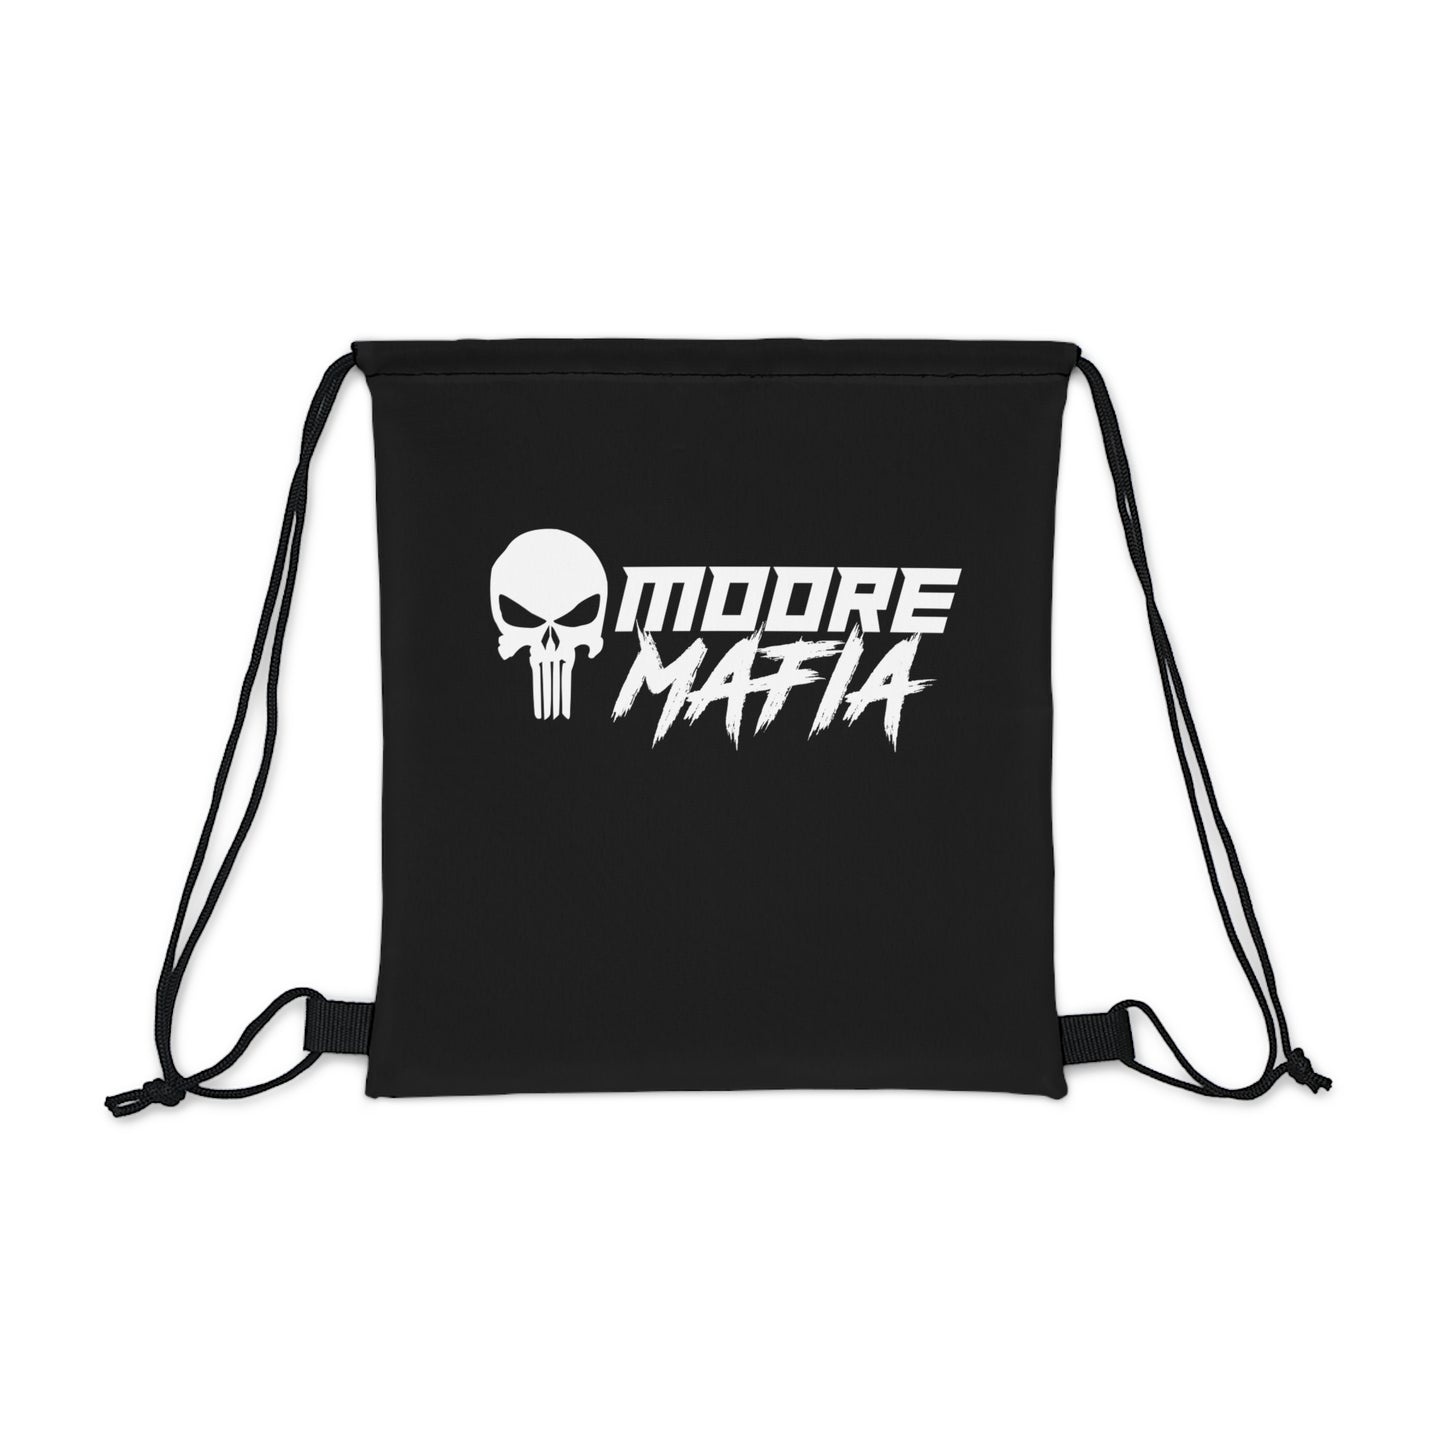 Moore Mafia Drawstring Bag